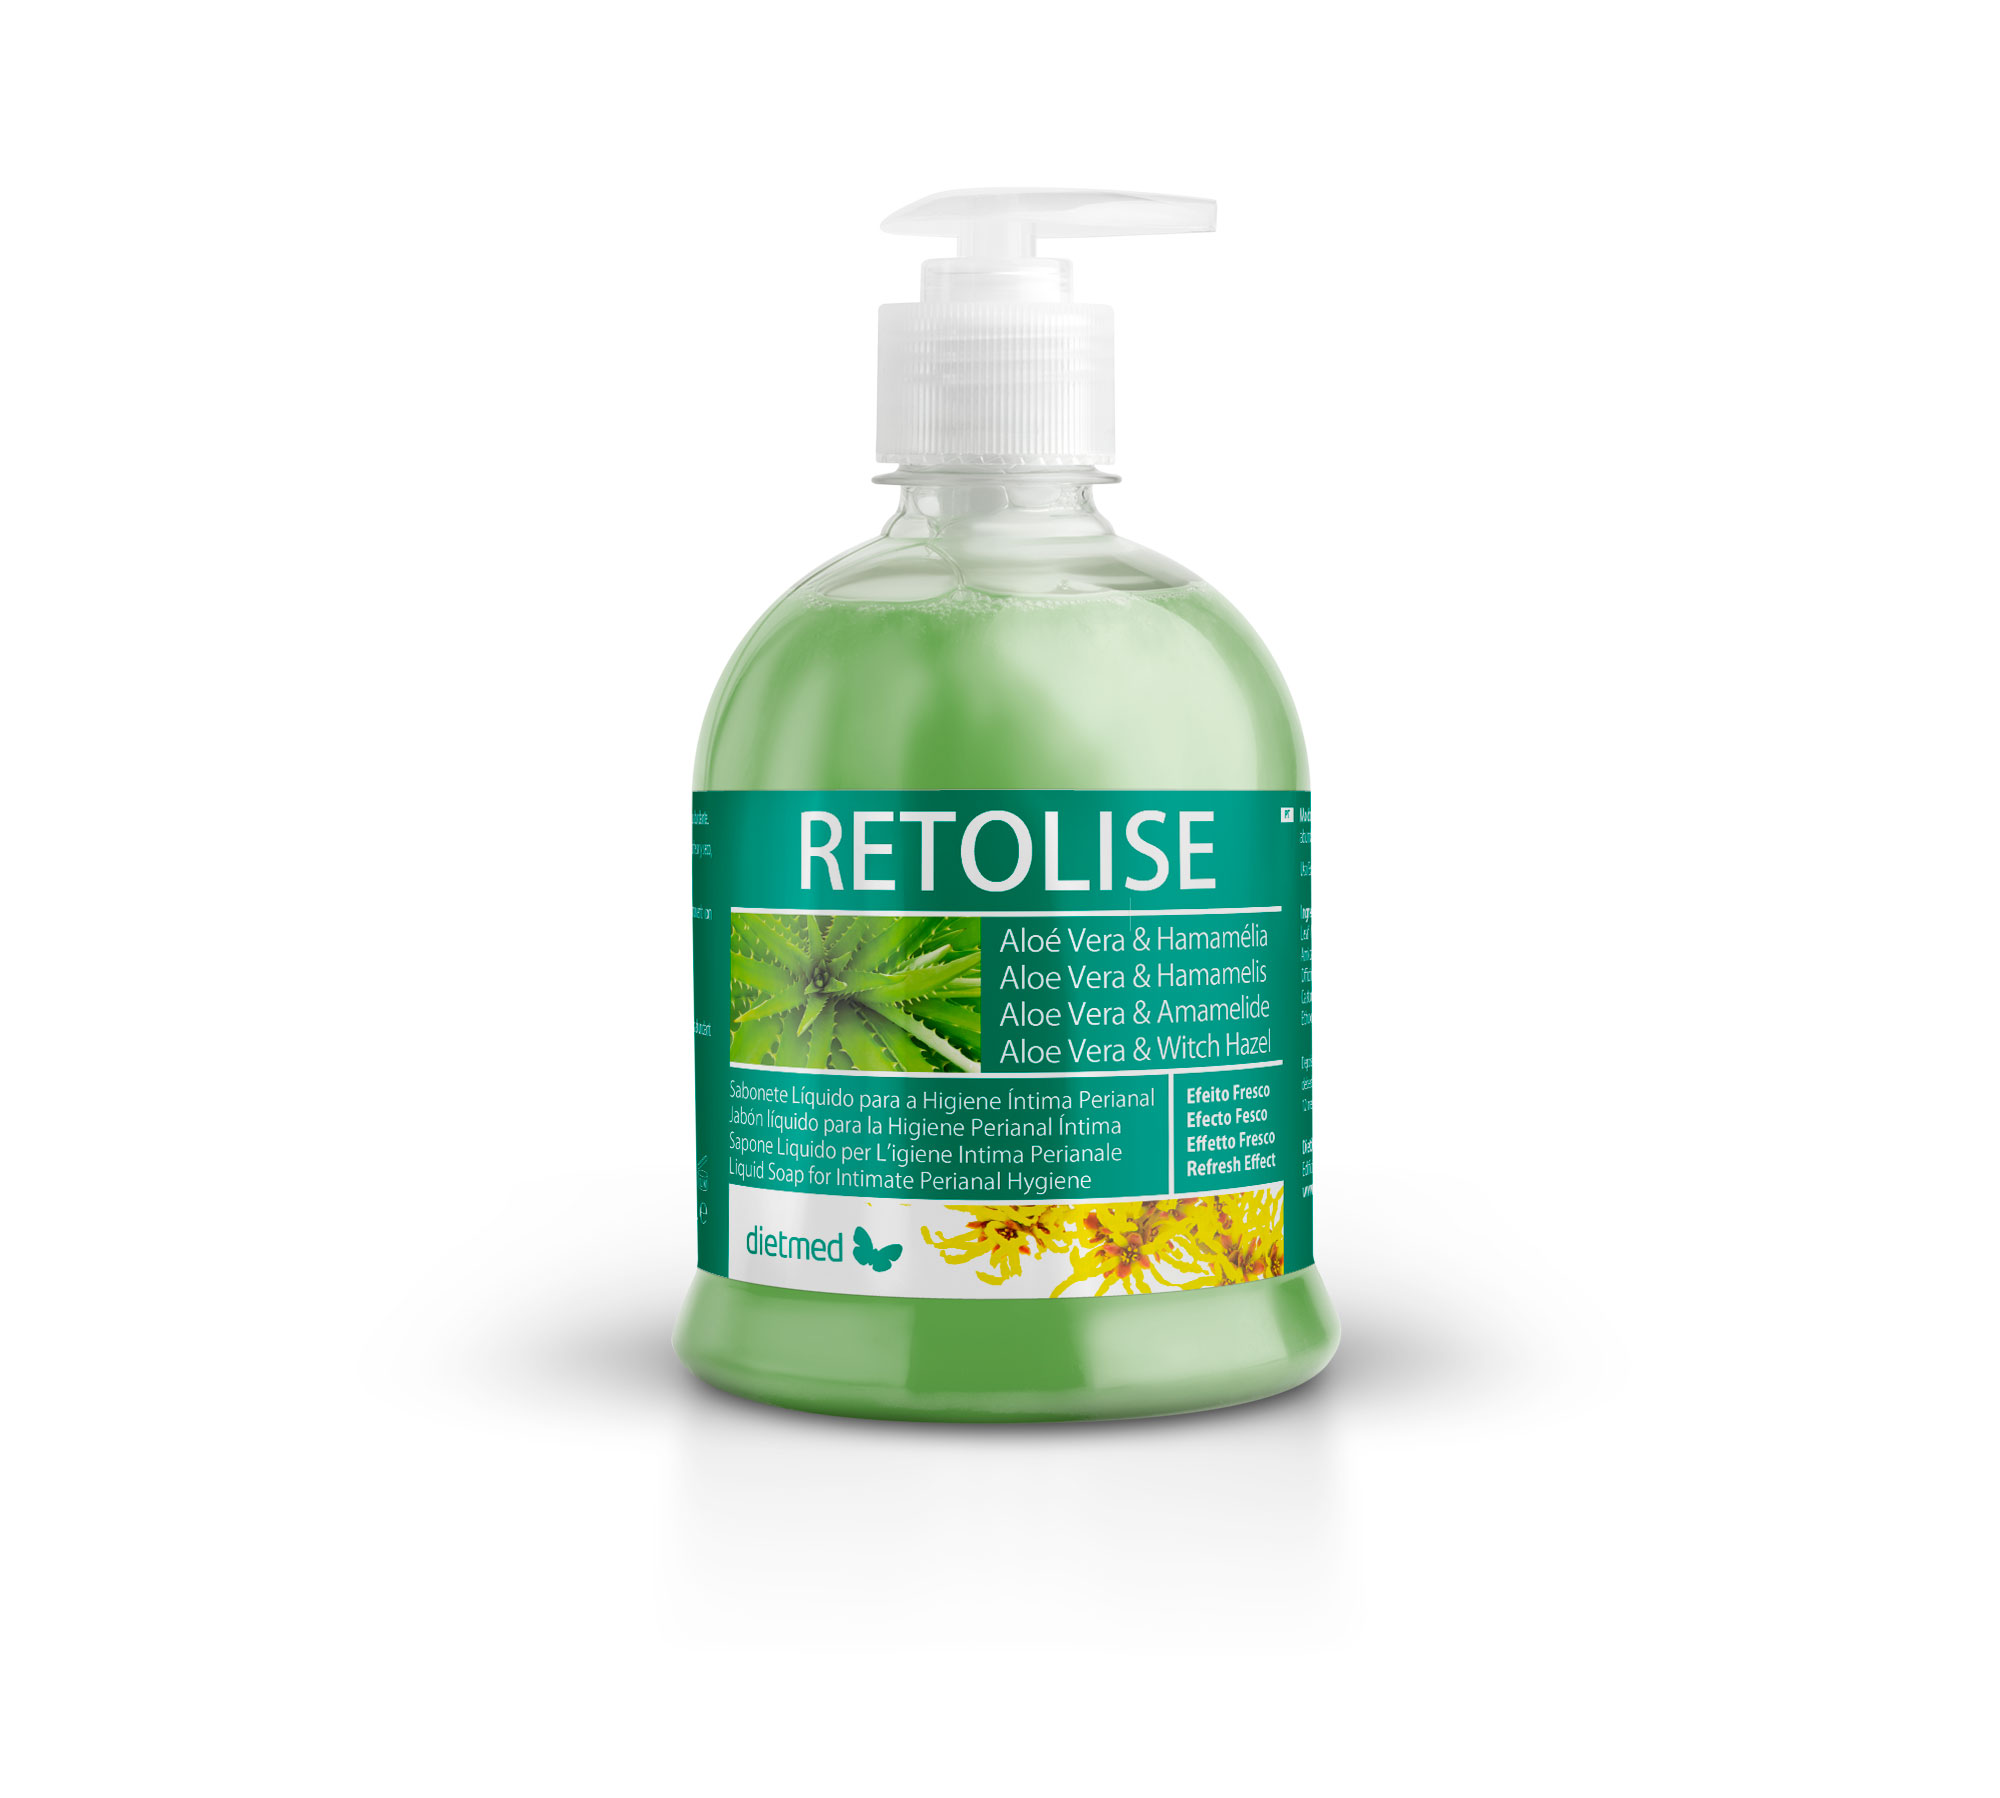 RETOLISE gel para higiene ntima perianal  (330 ml)